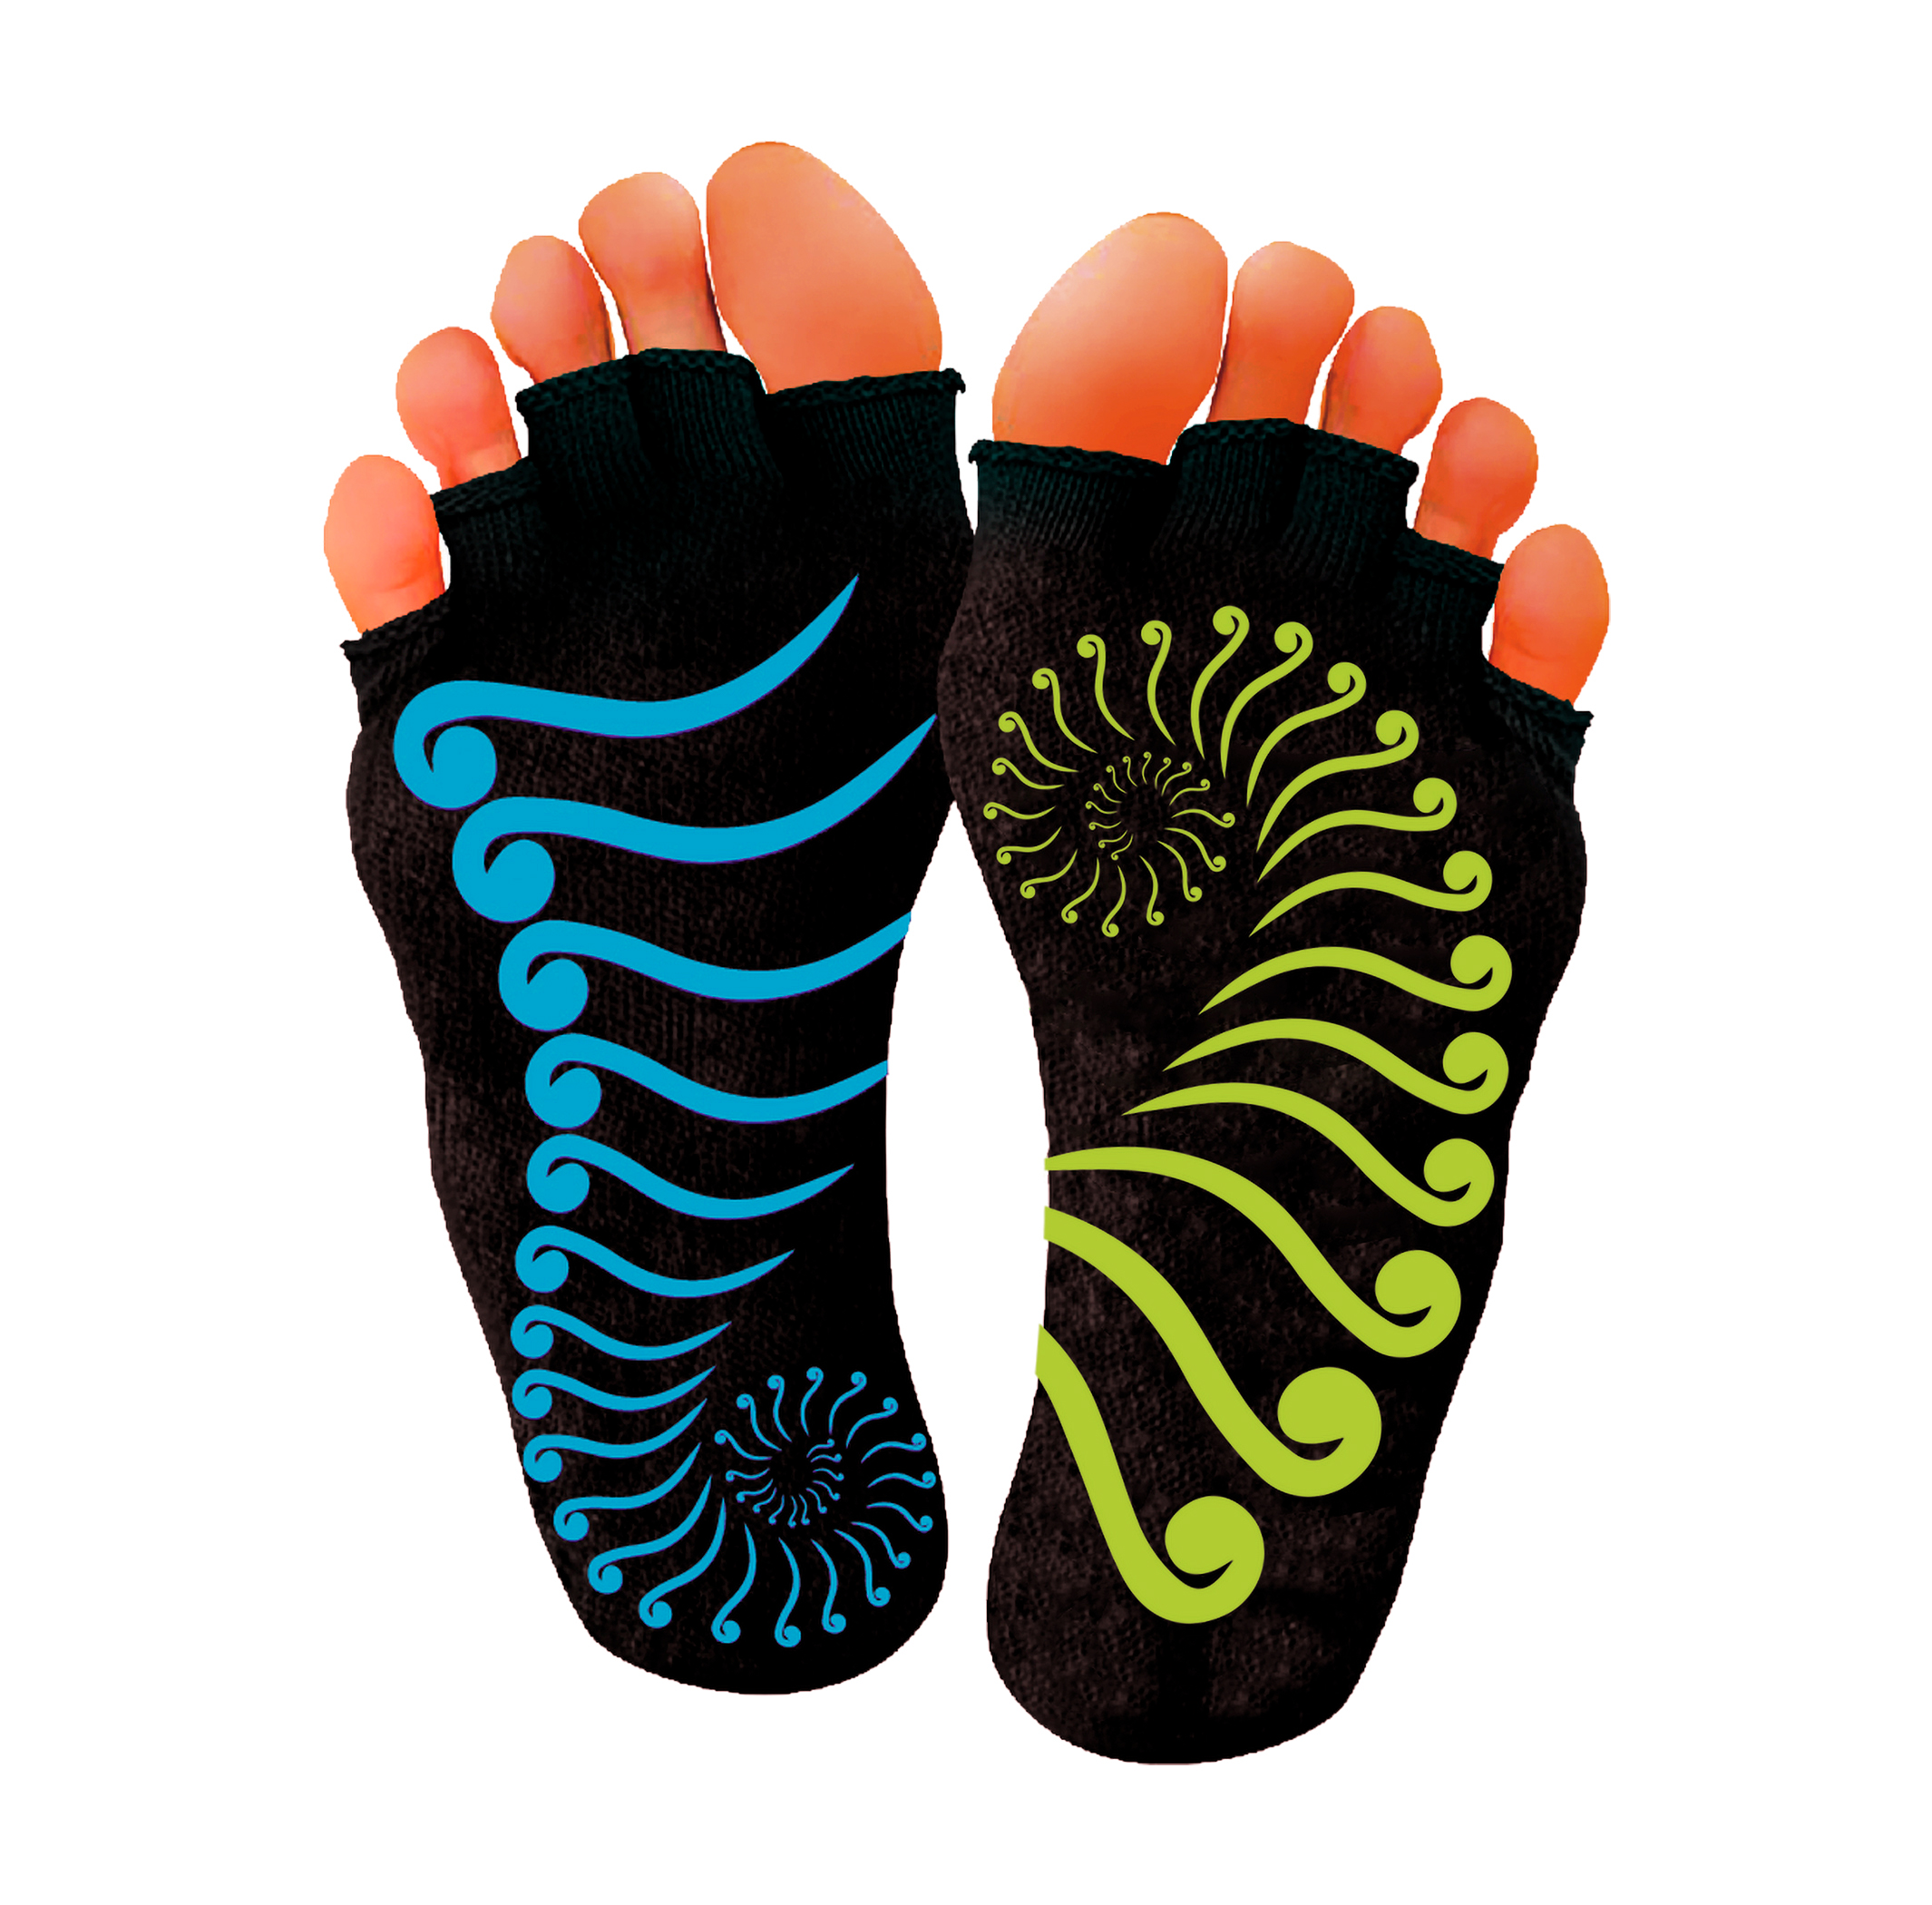 Toeless Yoga Socks - Breathable, Durable, Versatile & Stylish